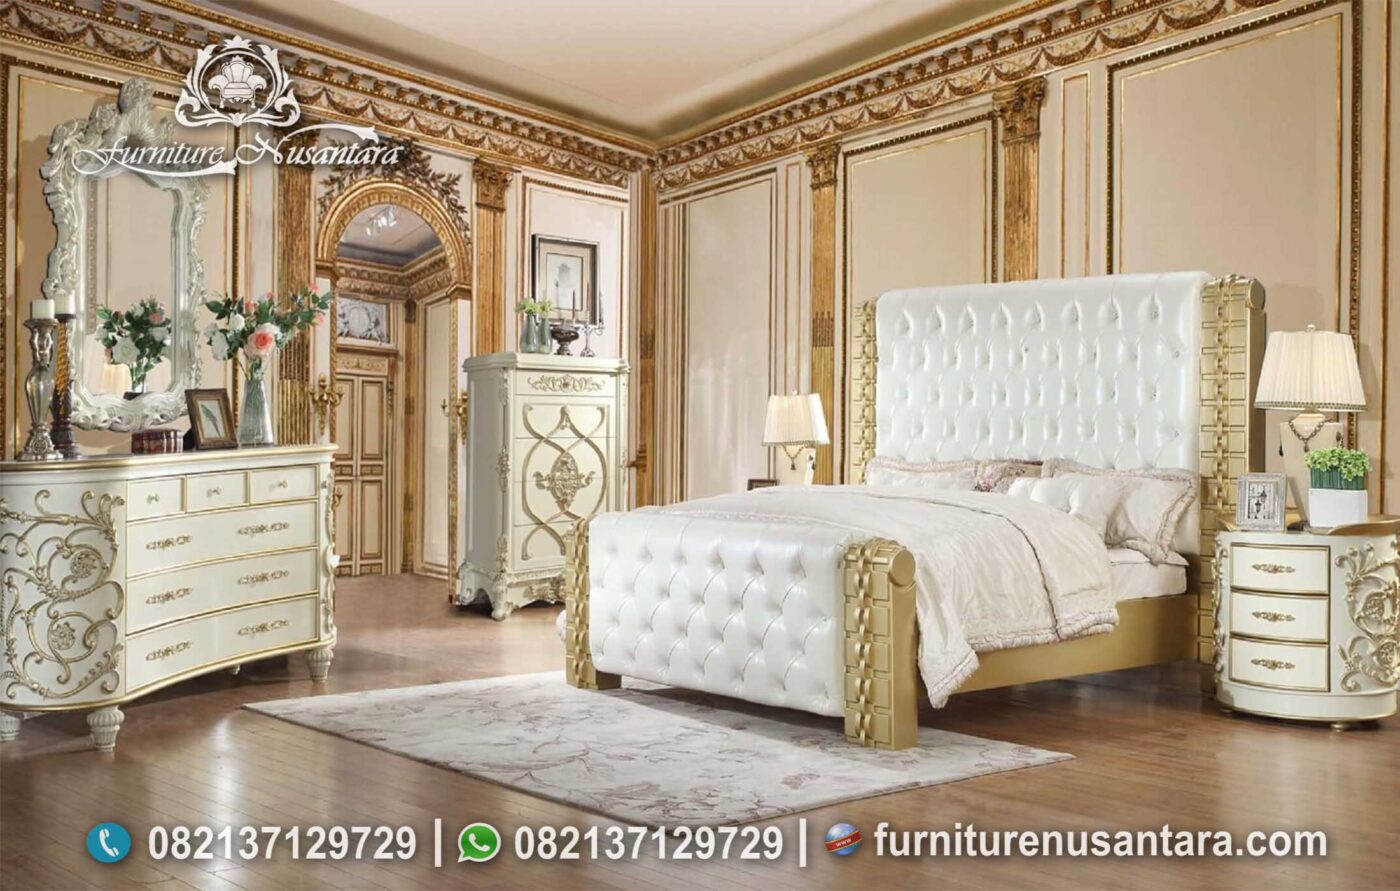 Desain Kamar Royal Luxury Unik KS-177, Furniture Nusantara